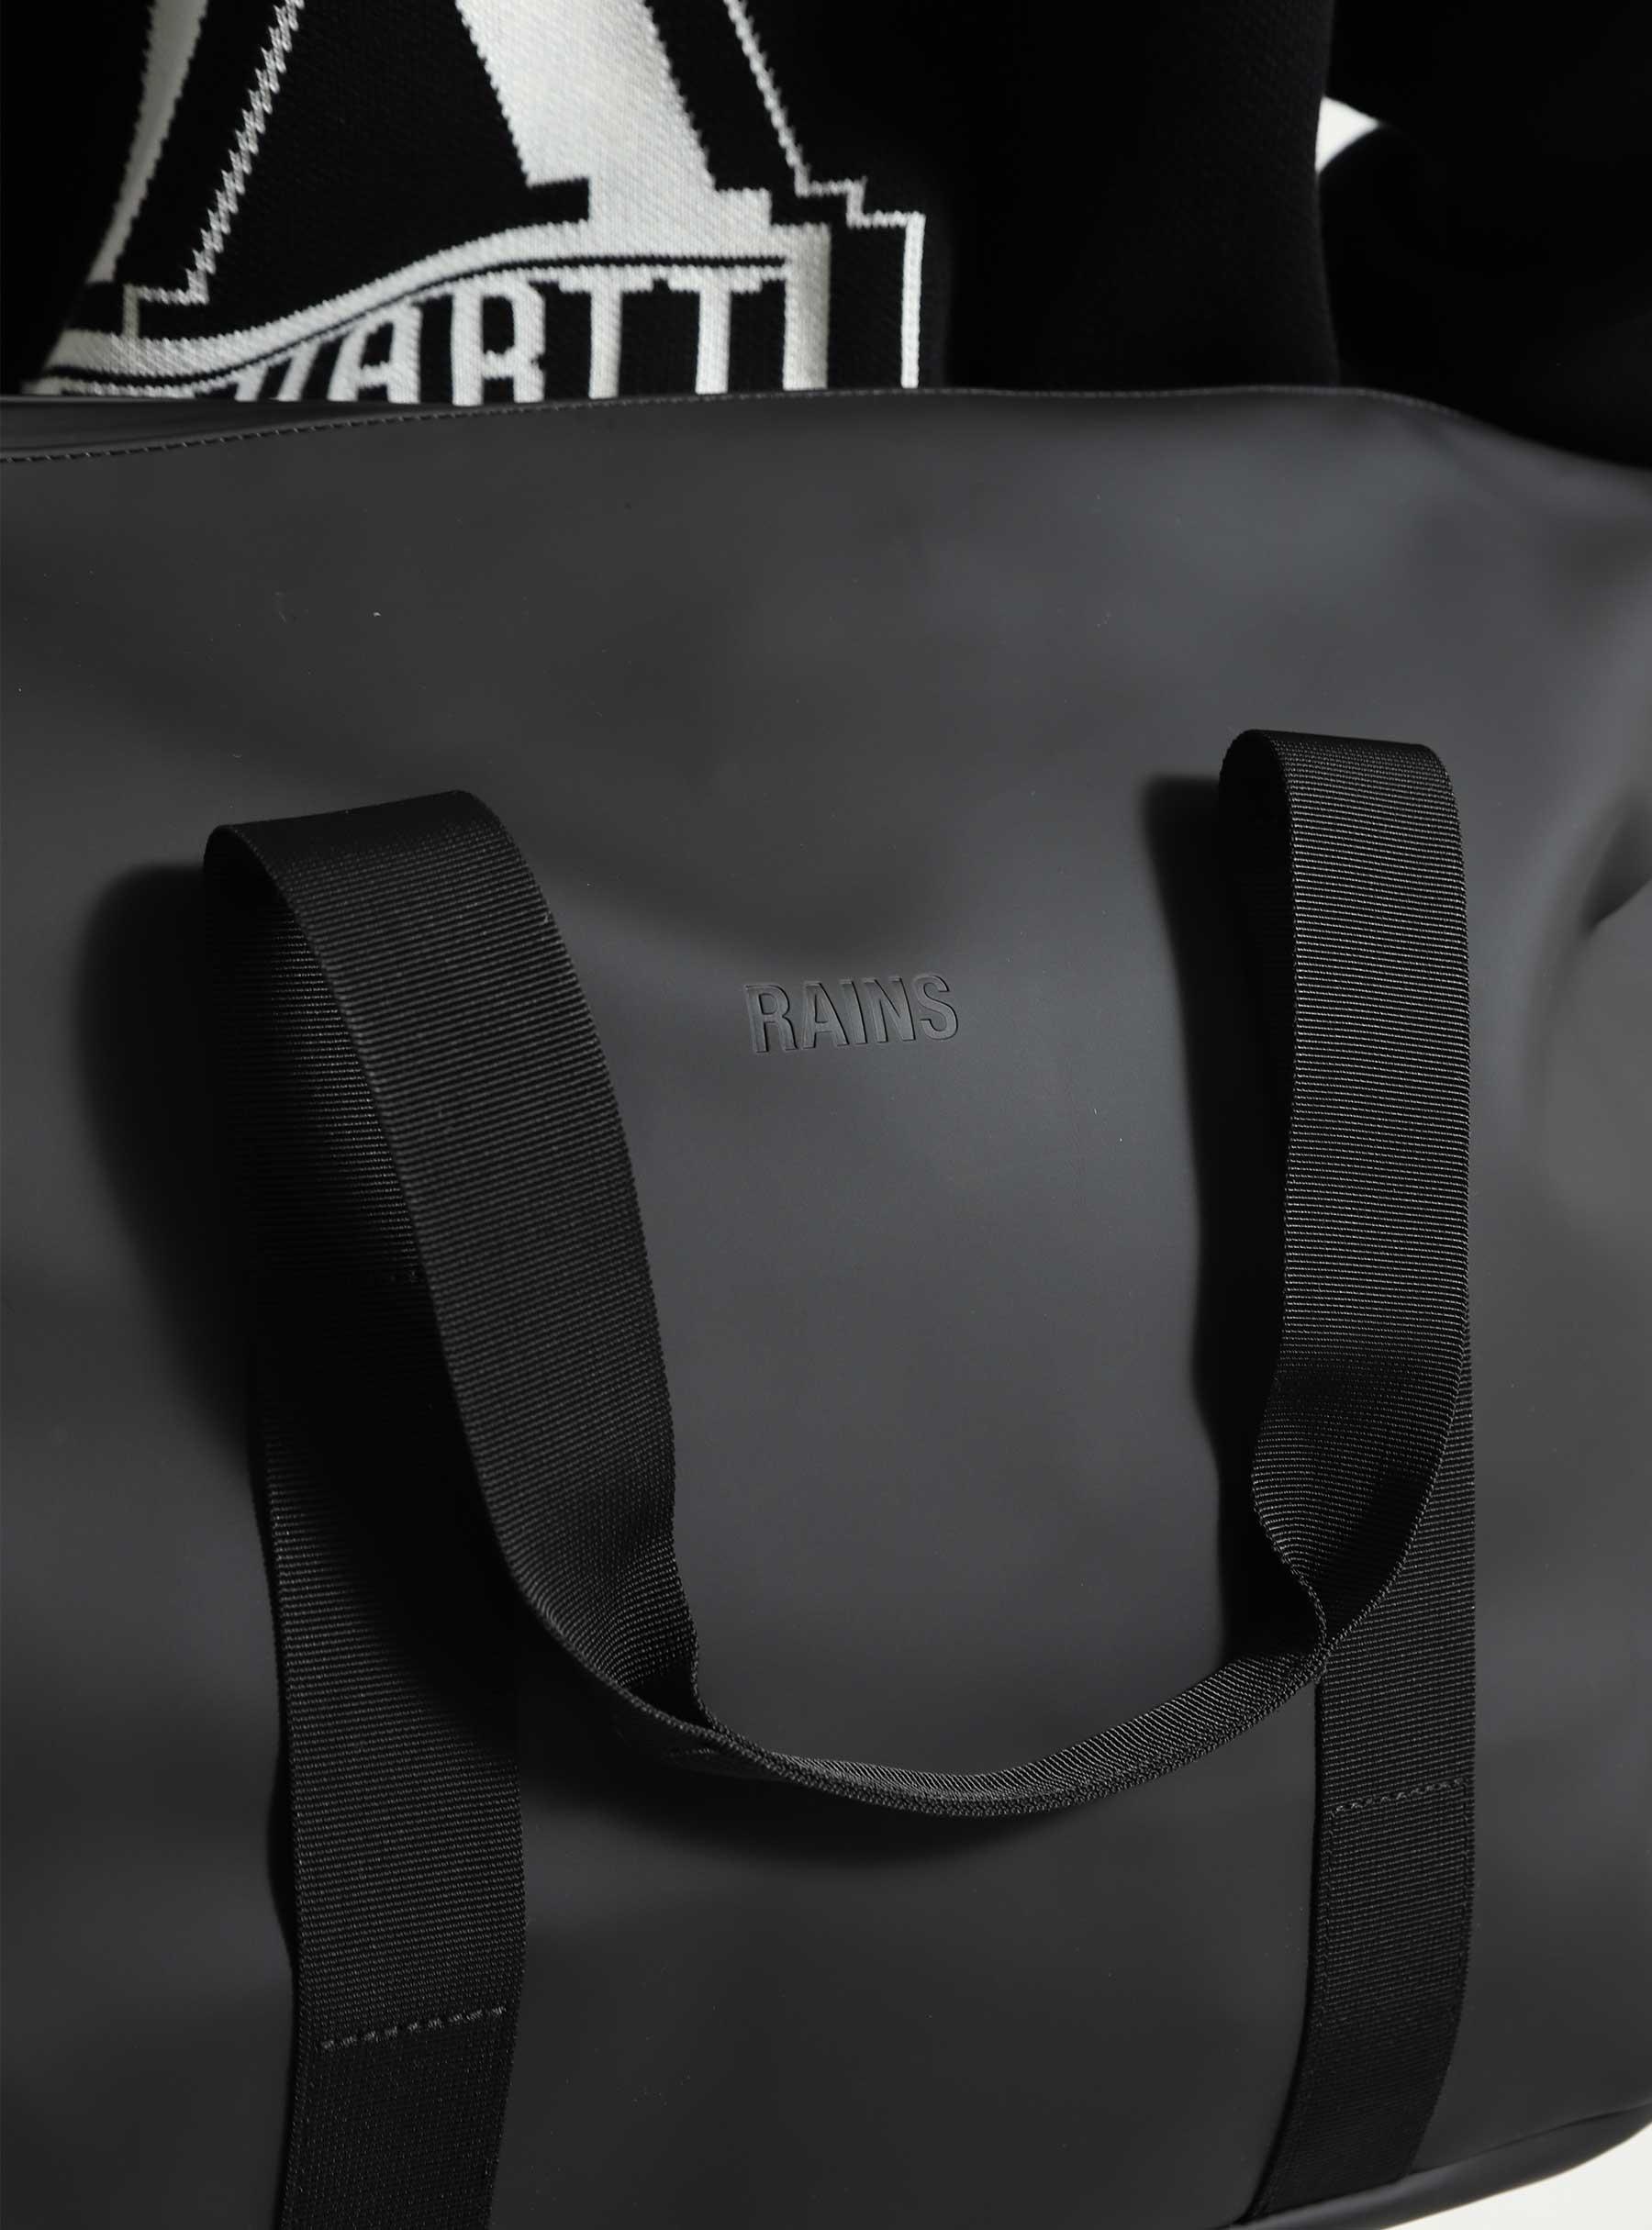 Hilo Weekend Bag W3 Black 14200-01